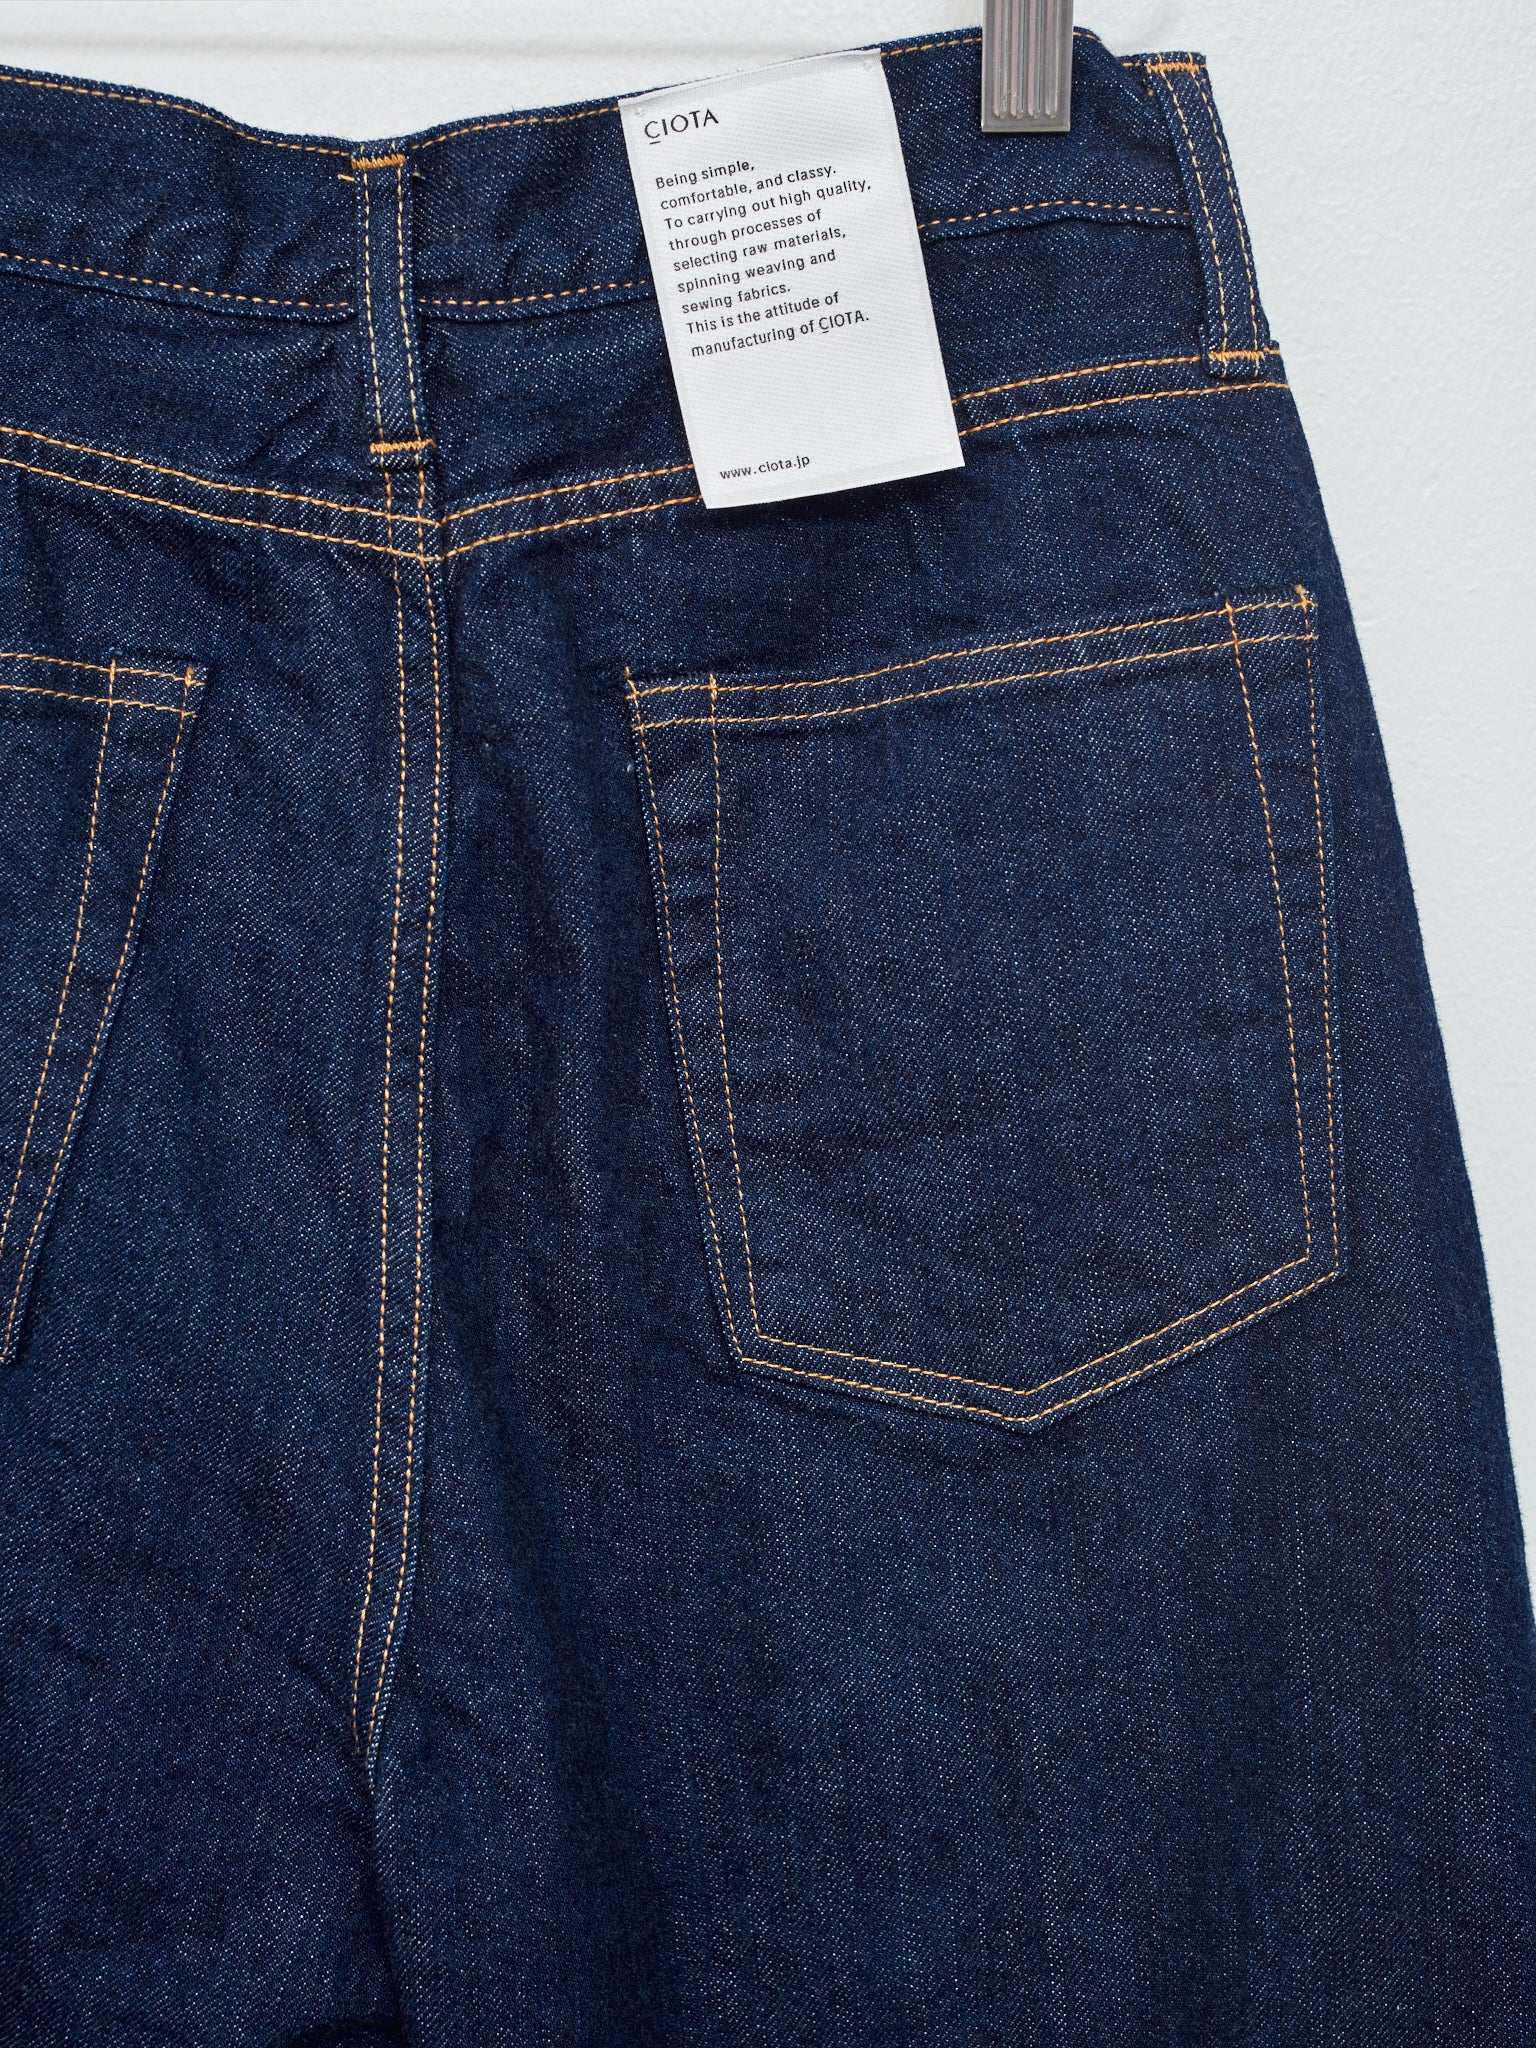 Namu Shop - Ciota High-Rise 5 Pocket Pants - Navy (One Wash)